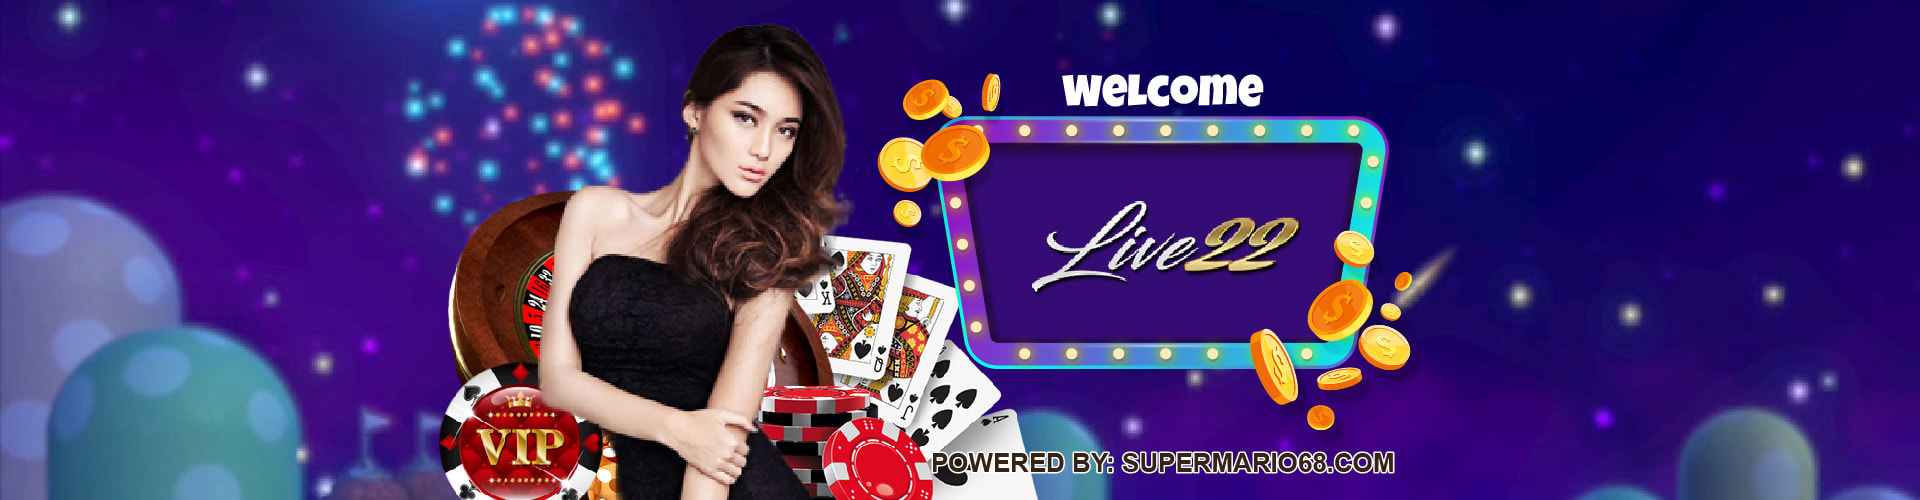 Live22 Casino Download